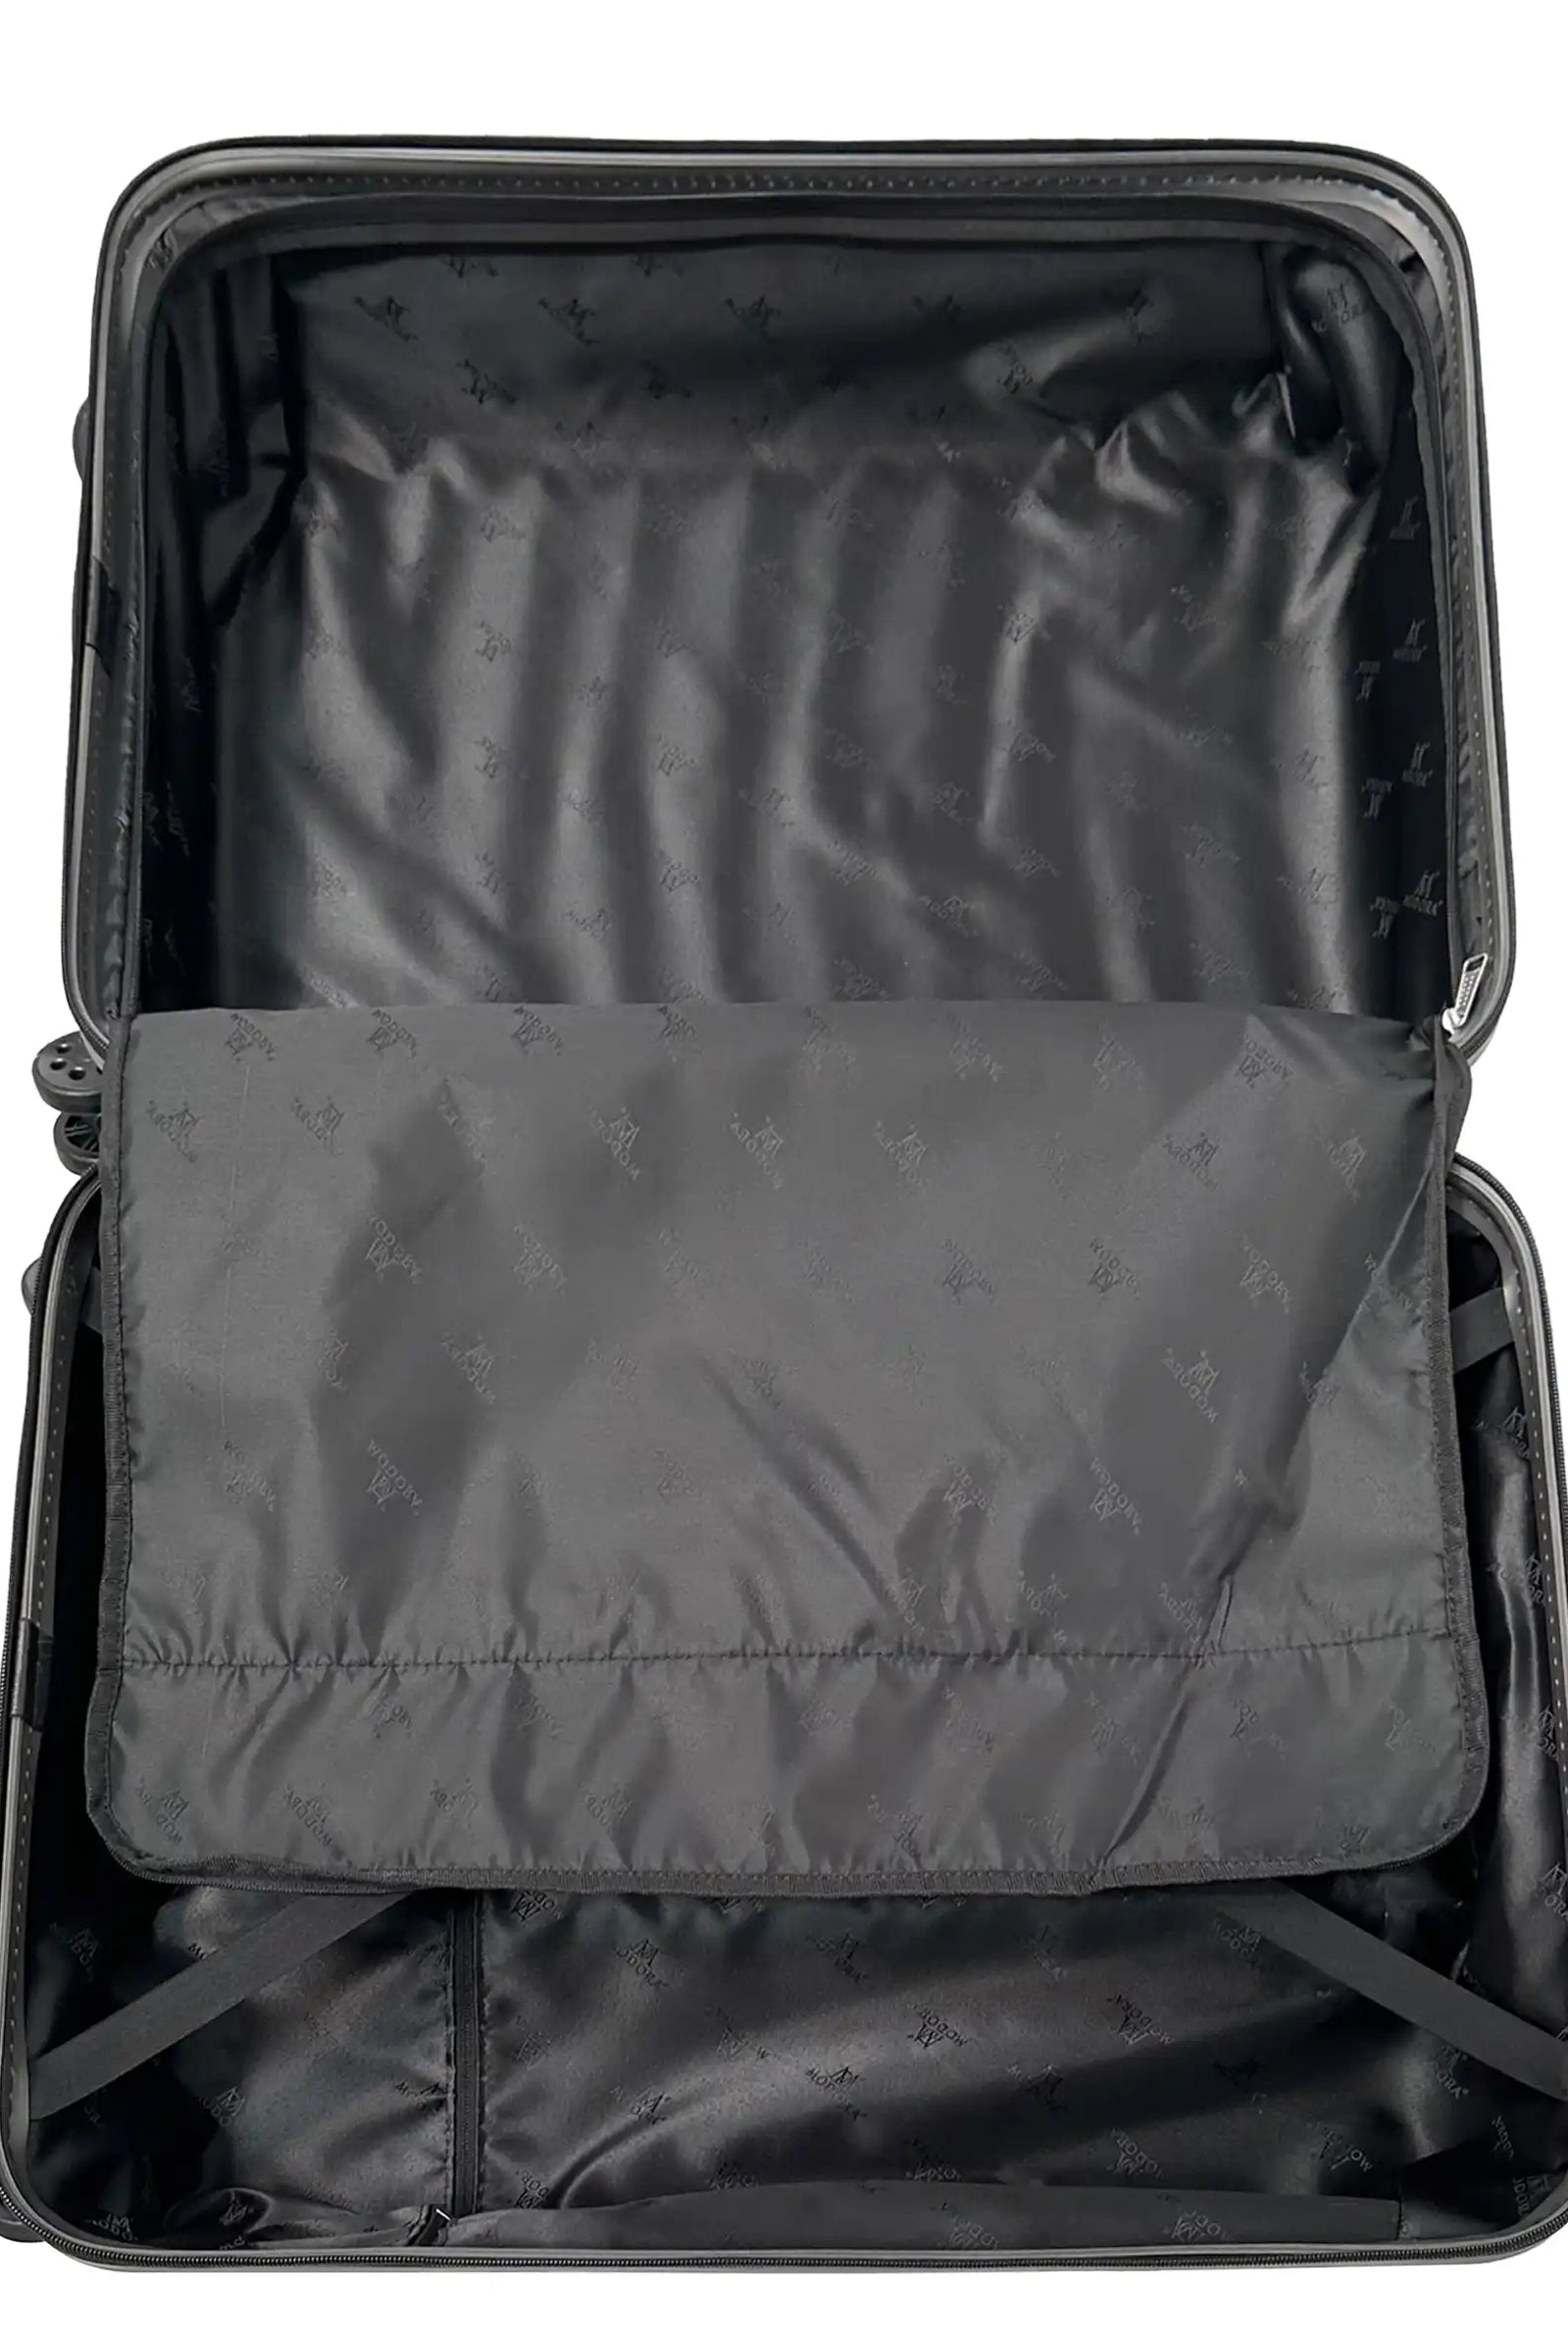 vague dark grey suitcase